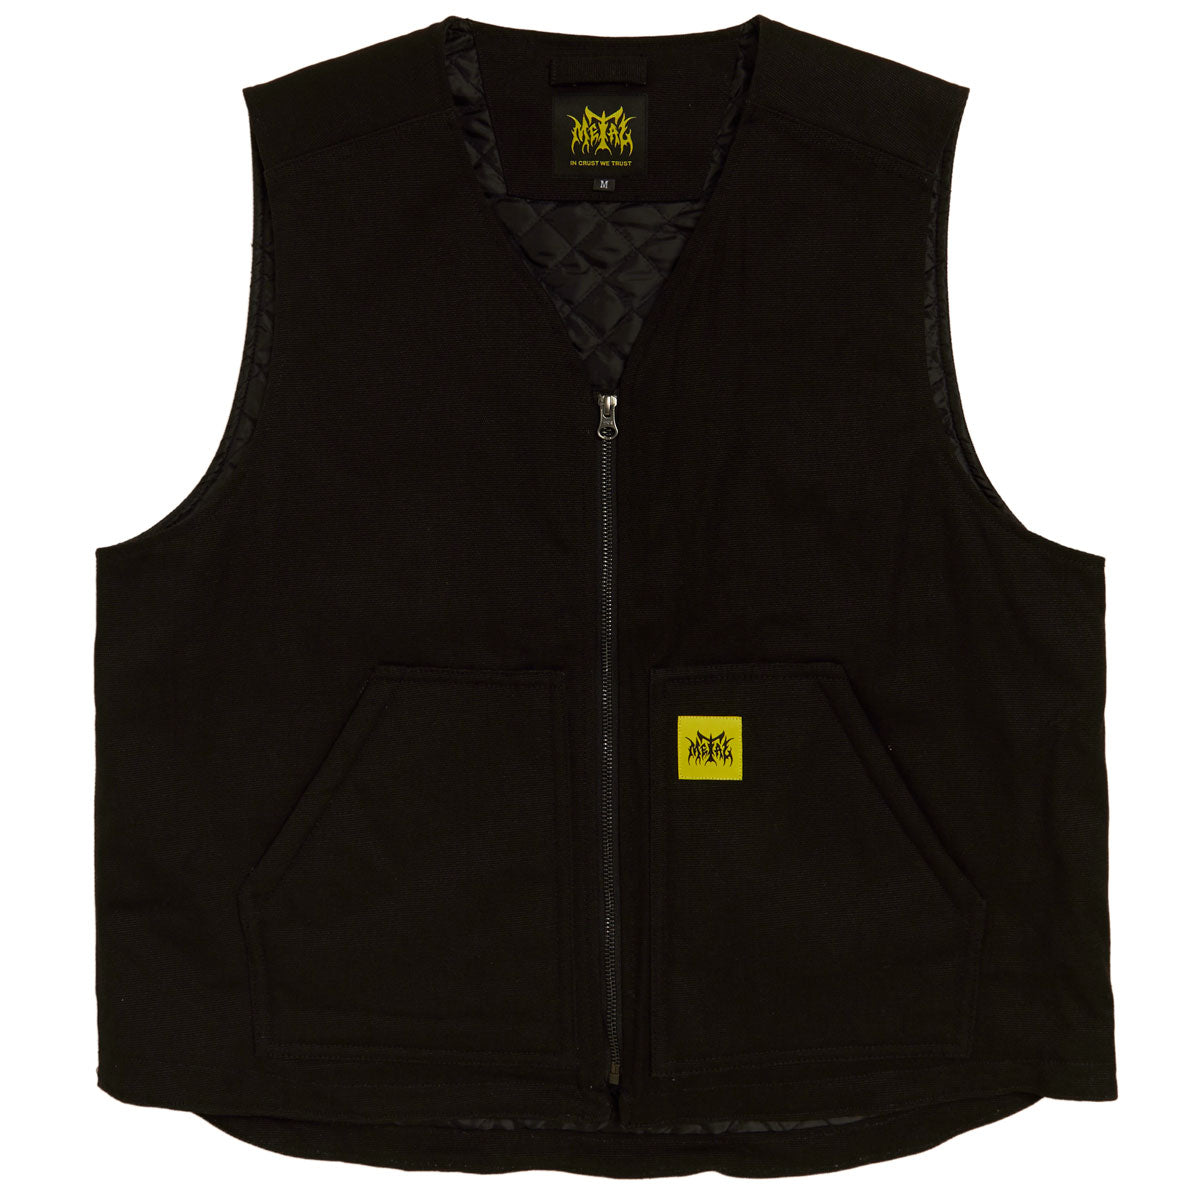 Metal Trust in Crust Vest Jacket - Black image 1